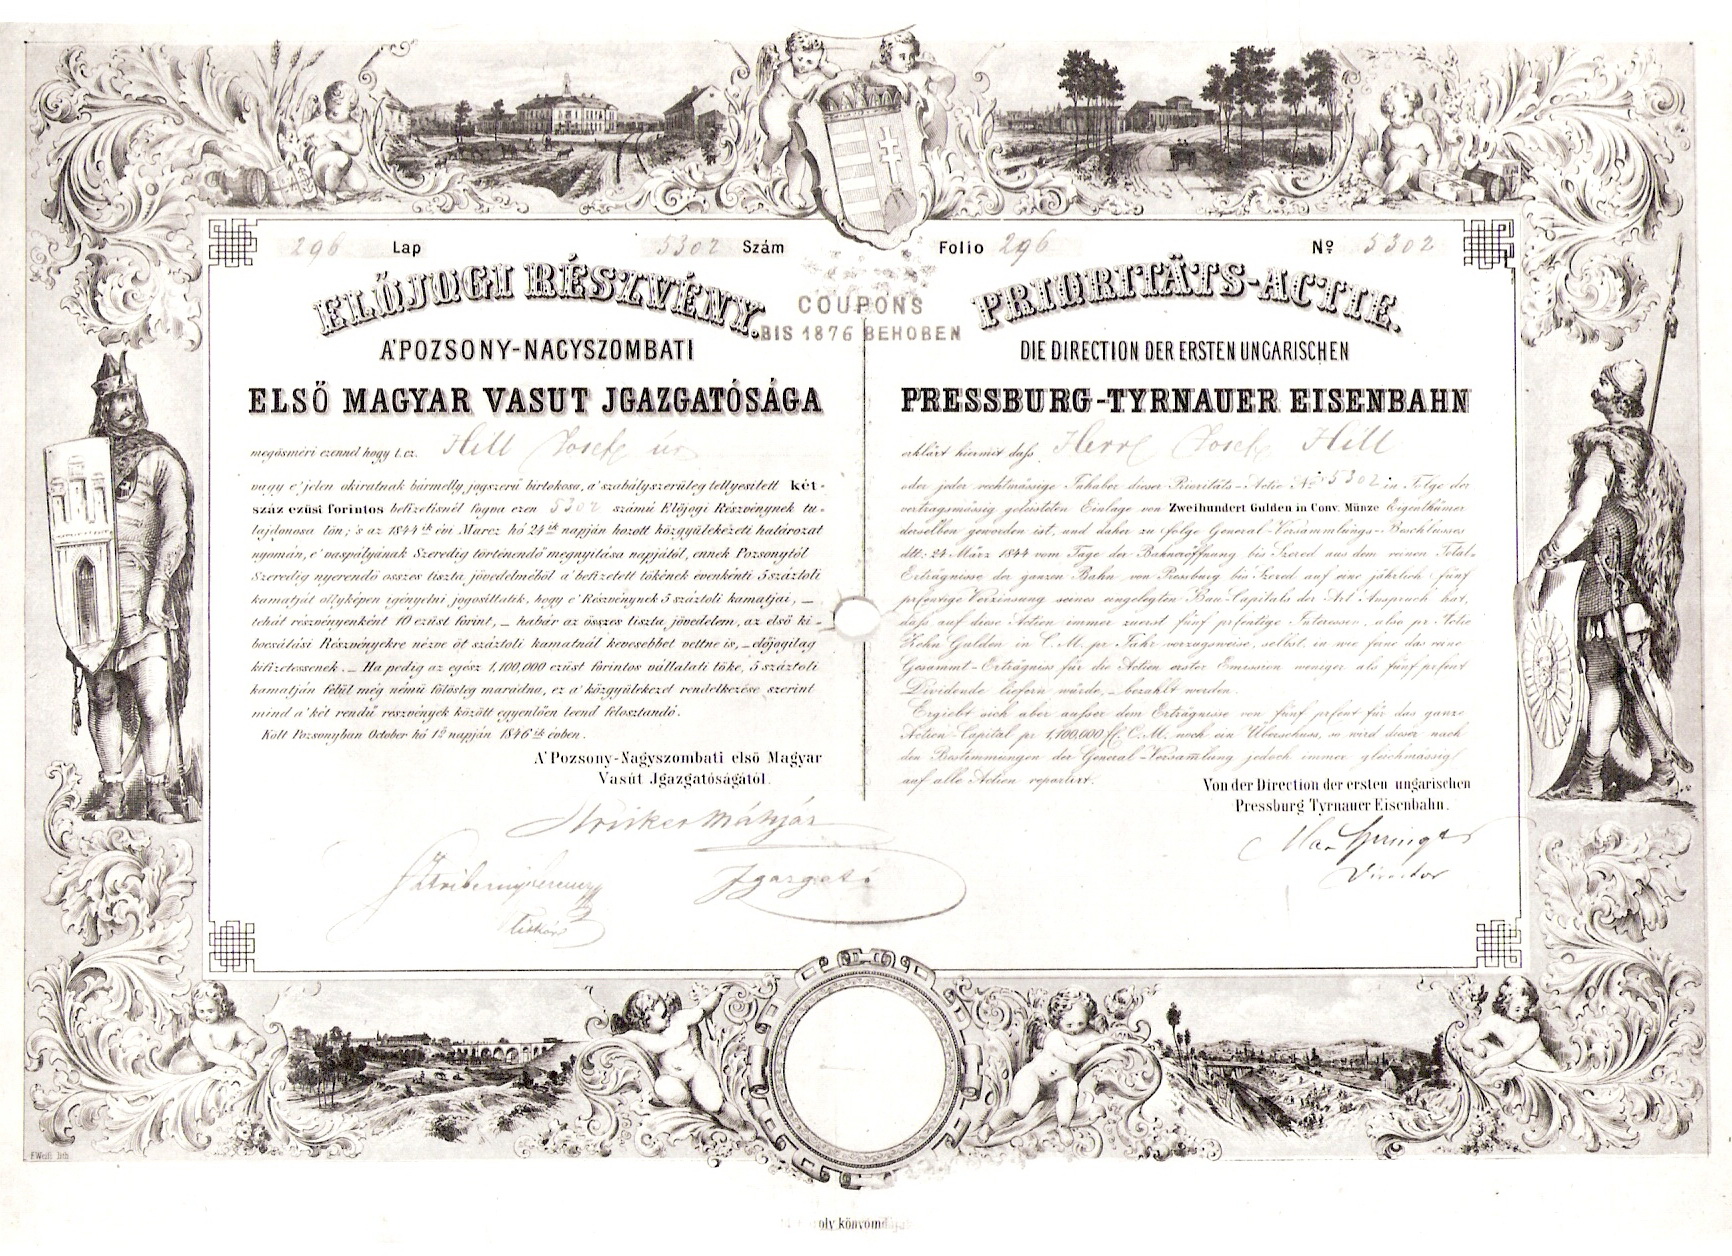  Faximile prioritnej akcie č. 5302 konskej železnice Bratislava - Trnava z 1.10.1846 v hodnote 200 zl. konv. meny. Repro: Anon, Trenčianske múzeum. 230 x 153 